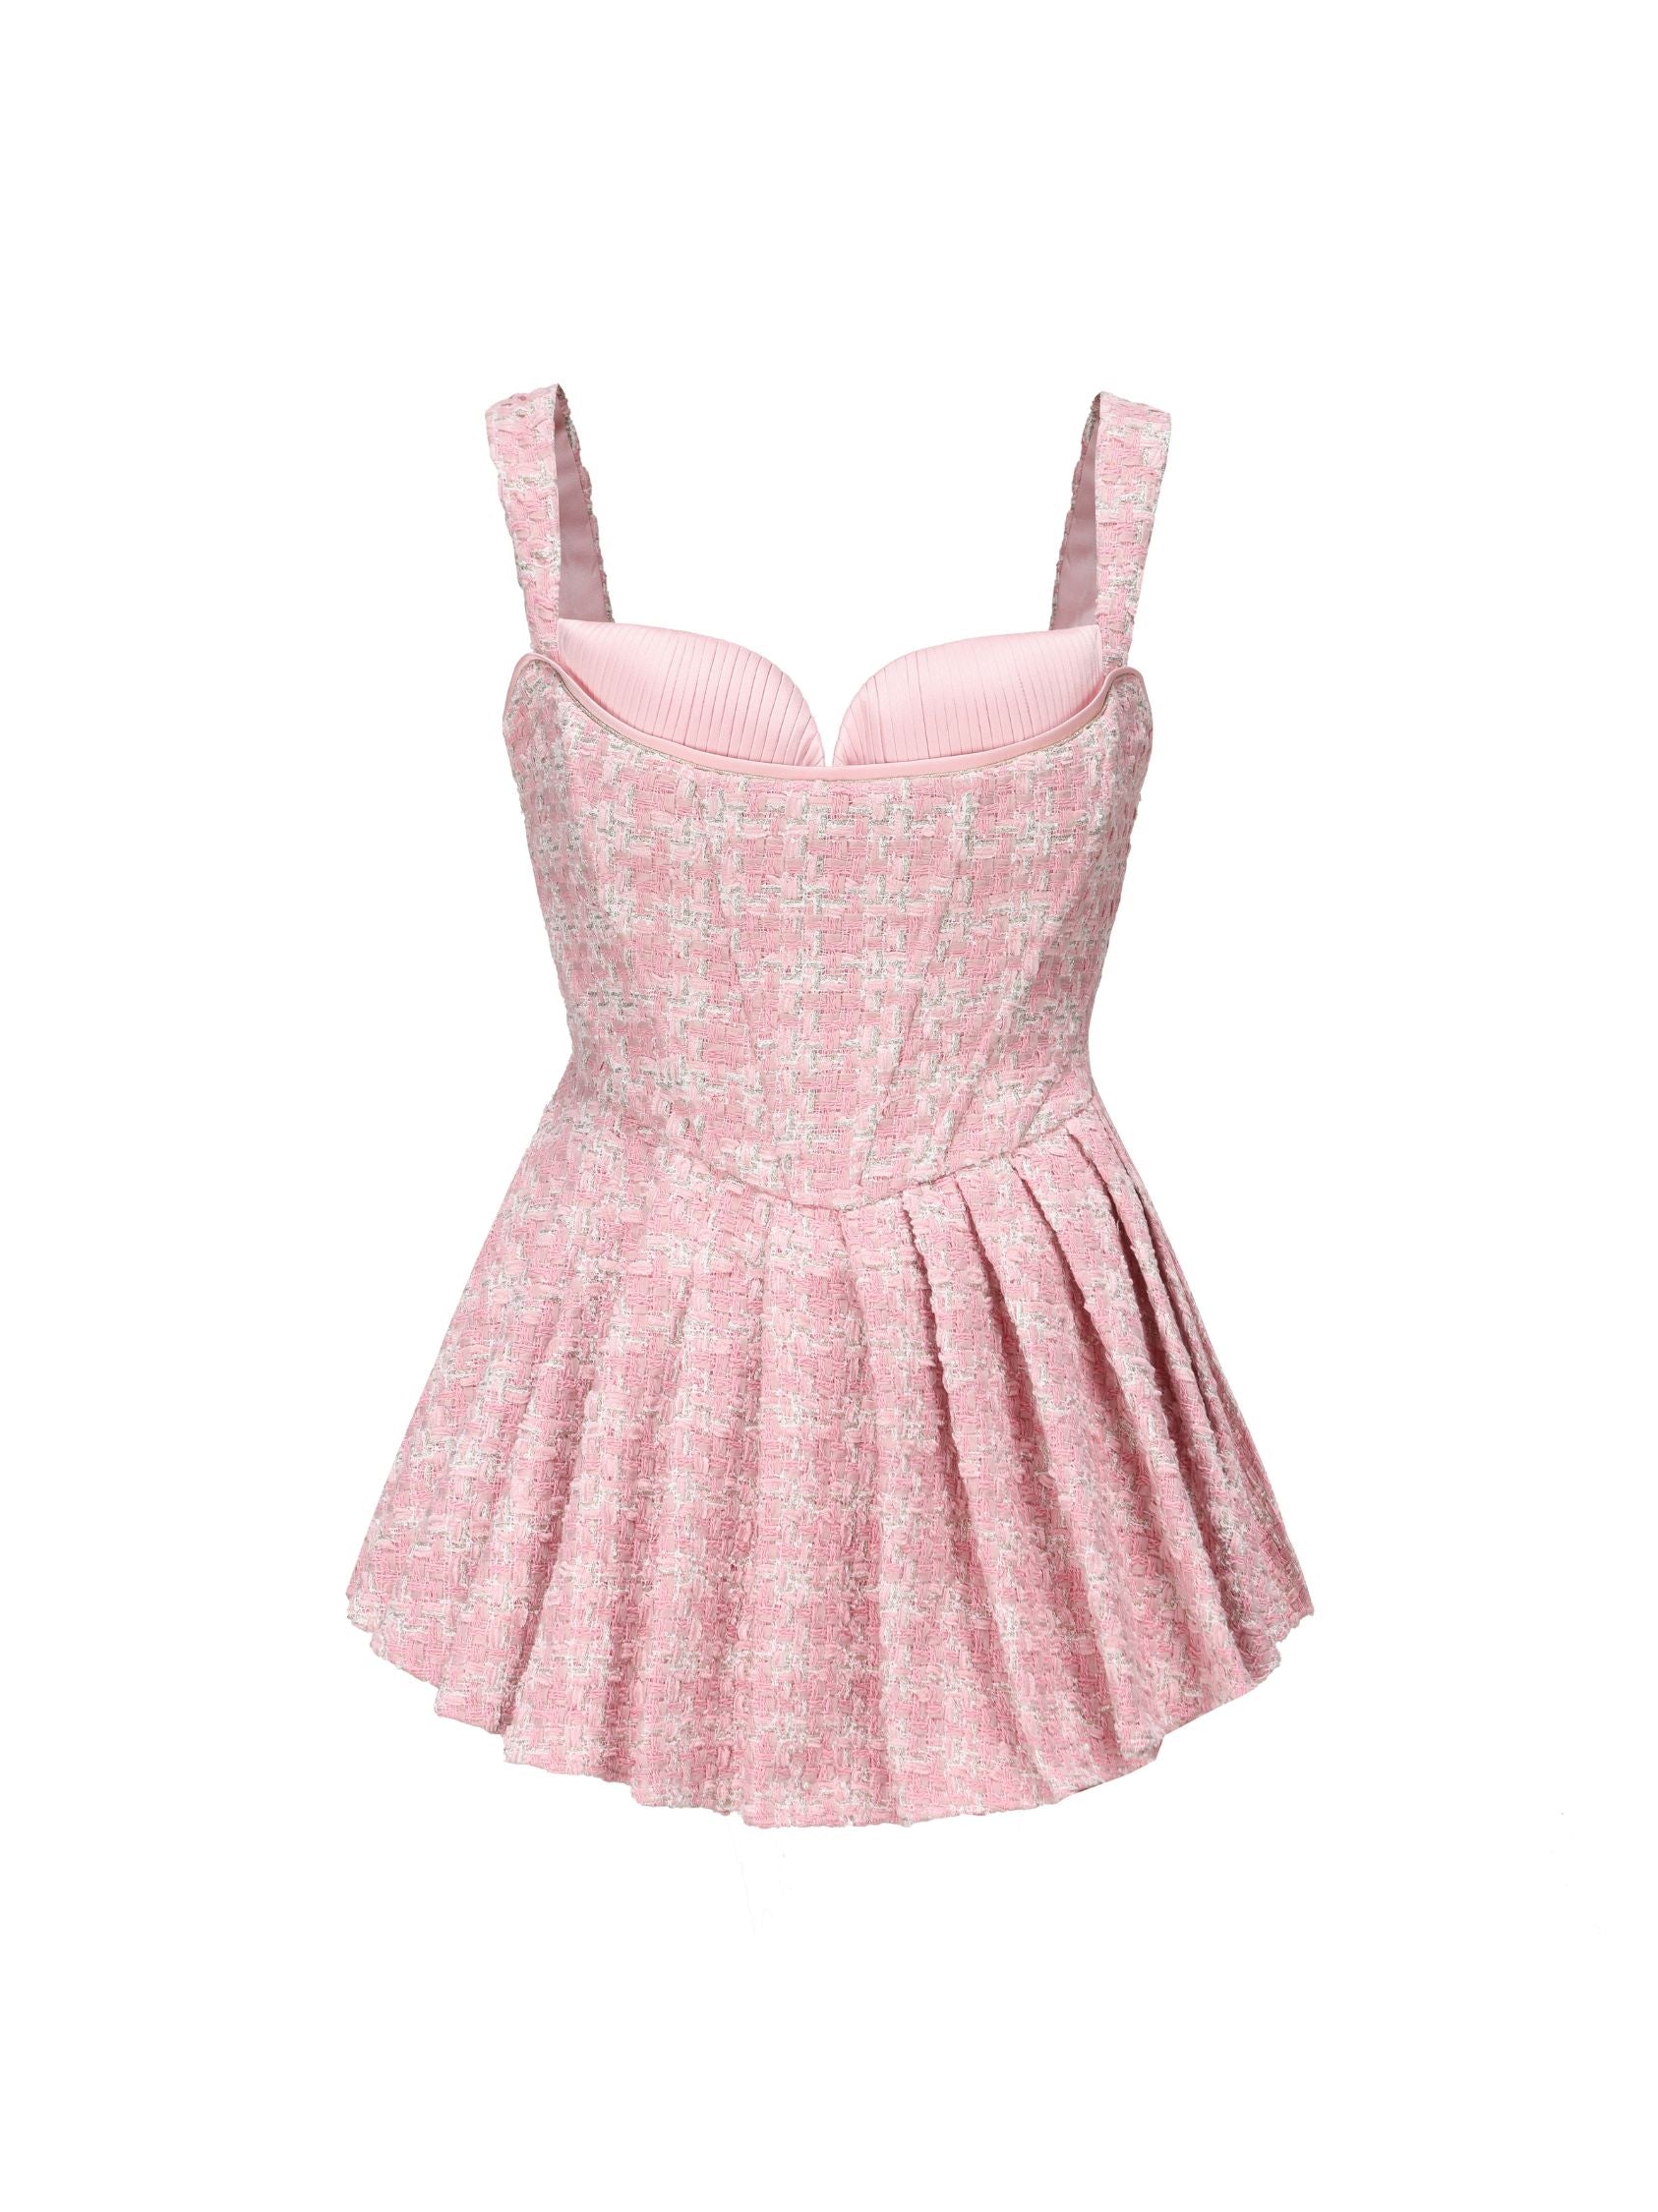 Chelsea Tweed Dress (Pink) – Nana Jacqueline